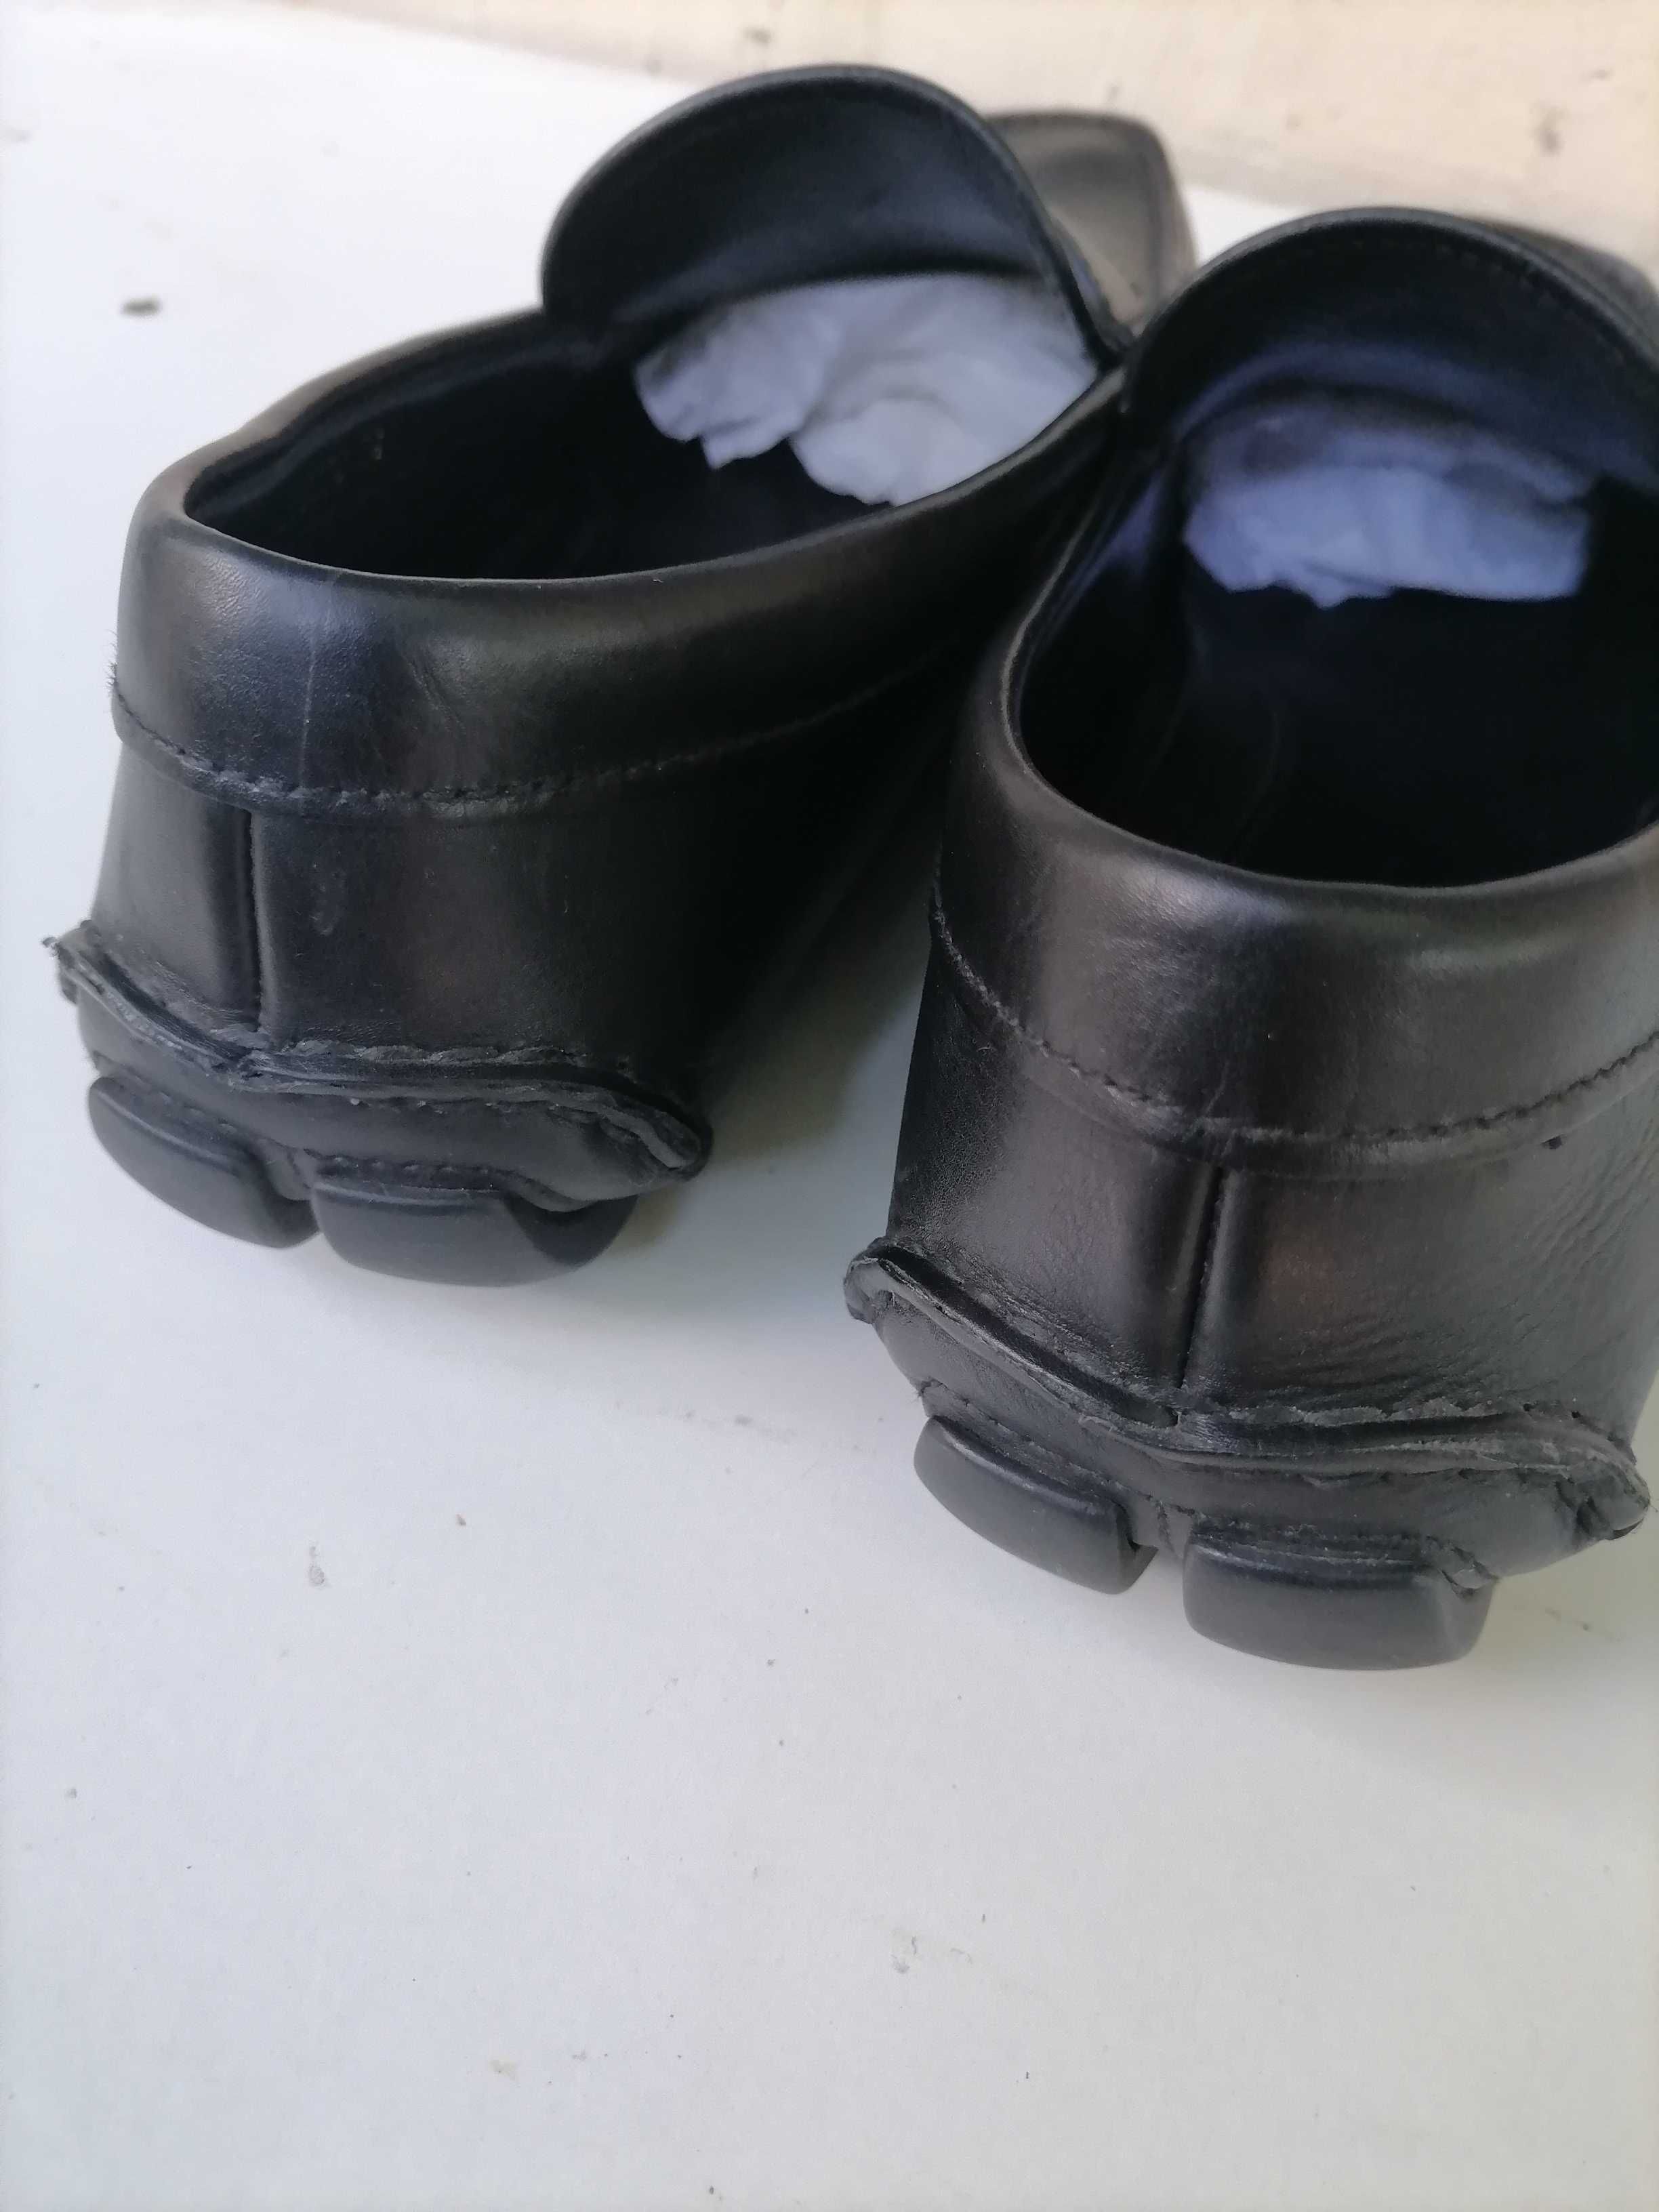 PRADA Milano 2D2170 Pantofi/loafers masura 41.5 100% originali Italia